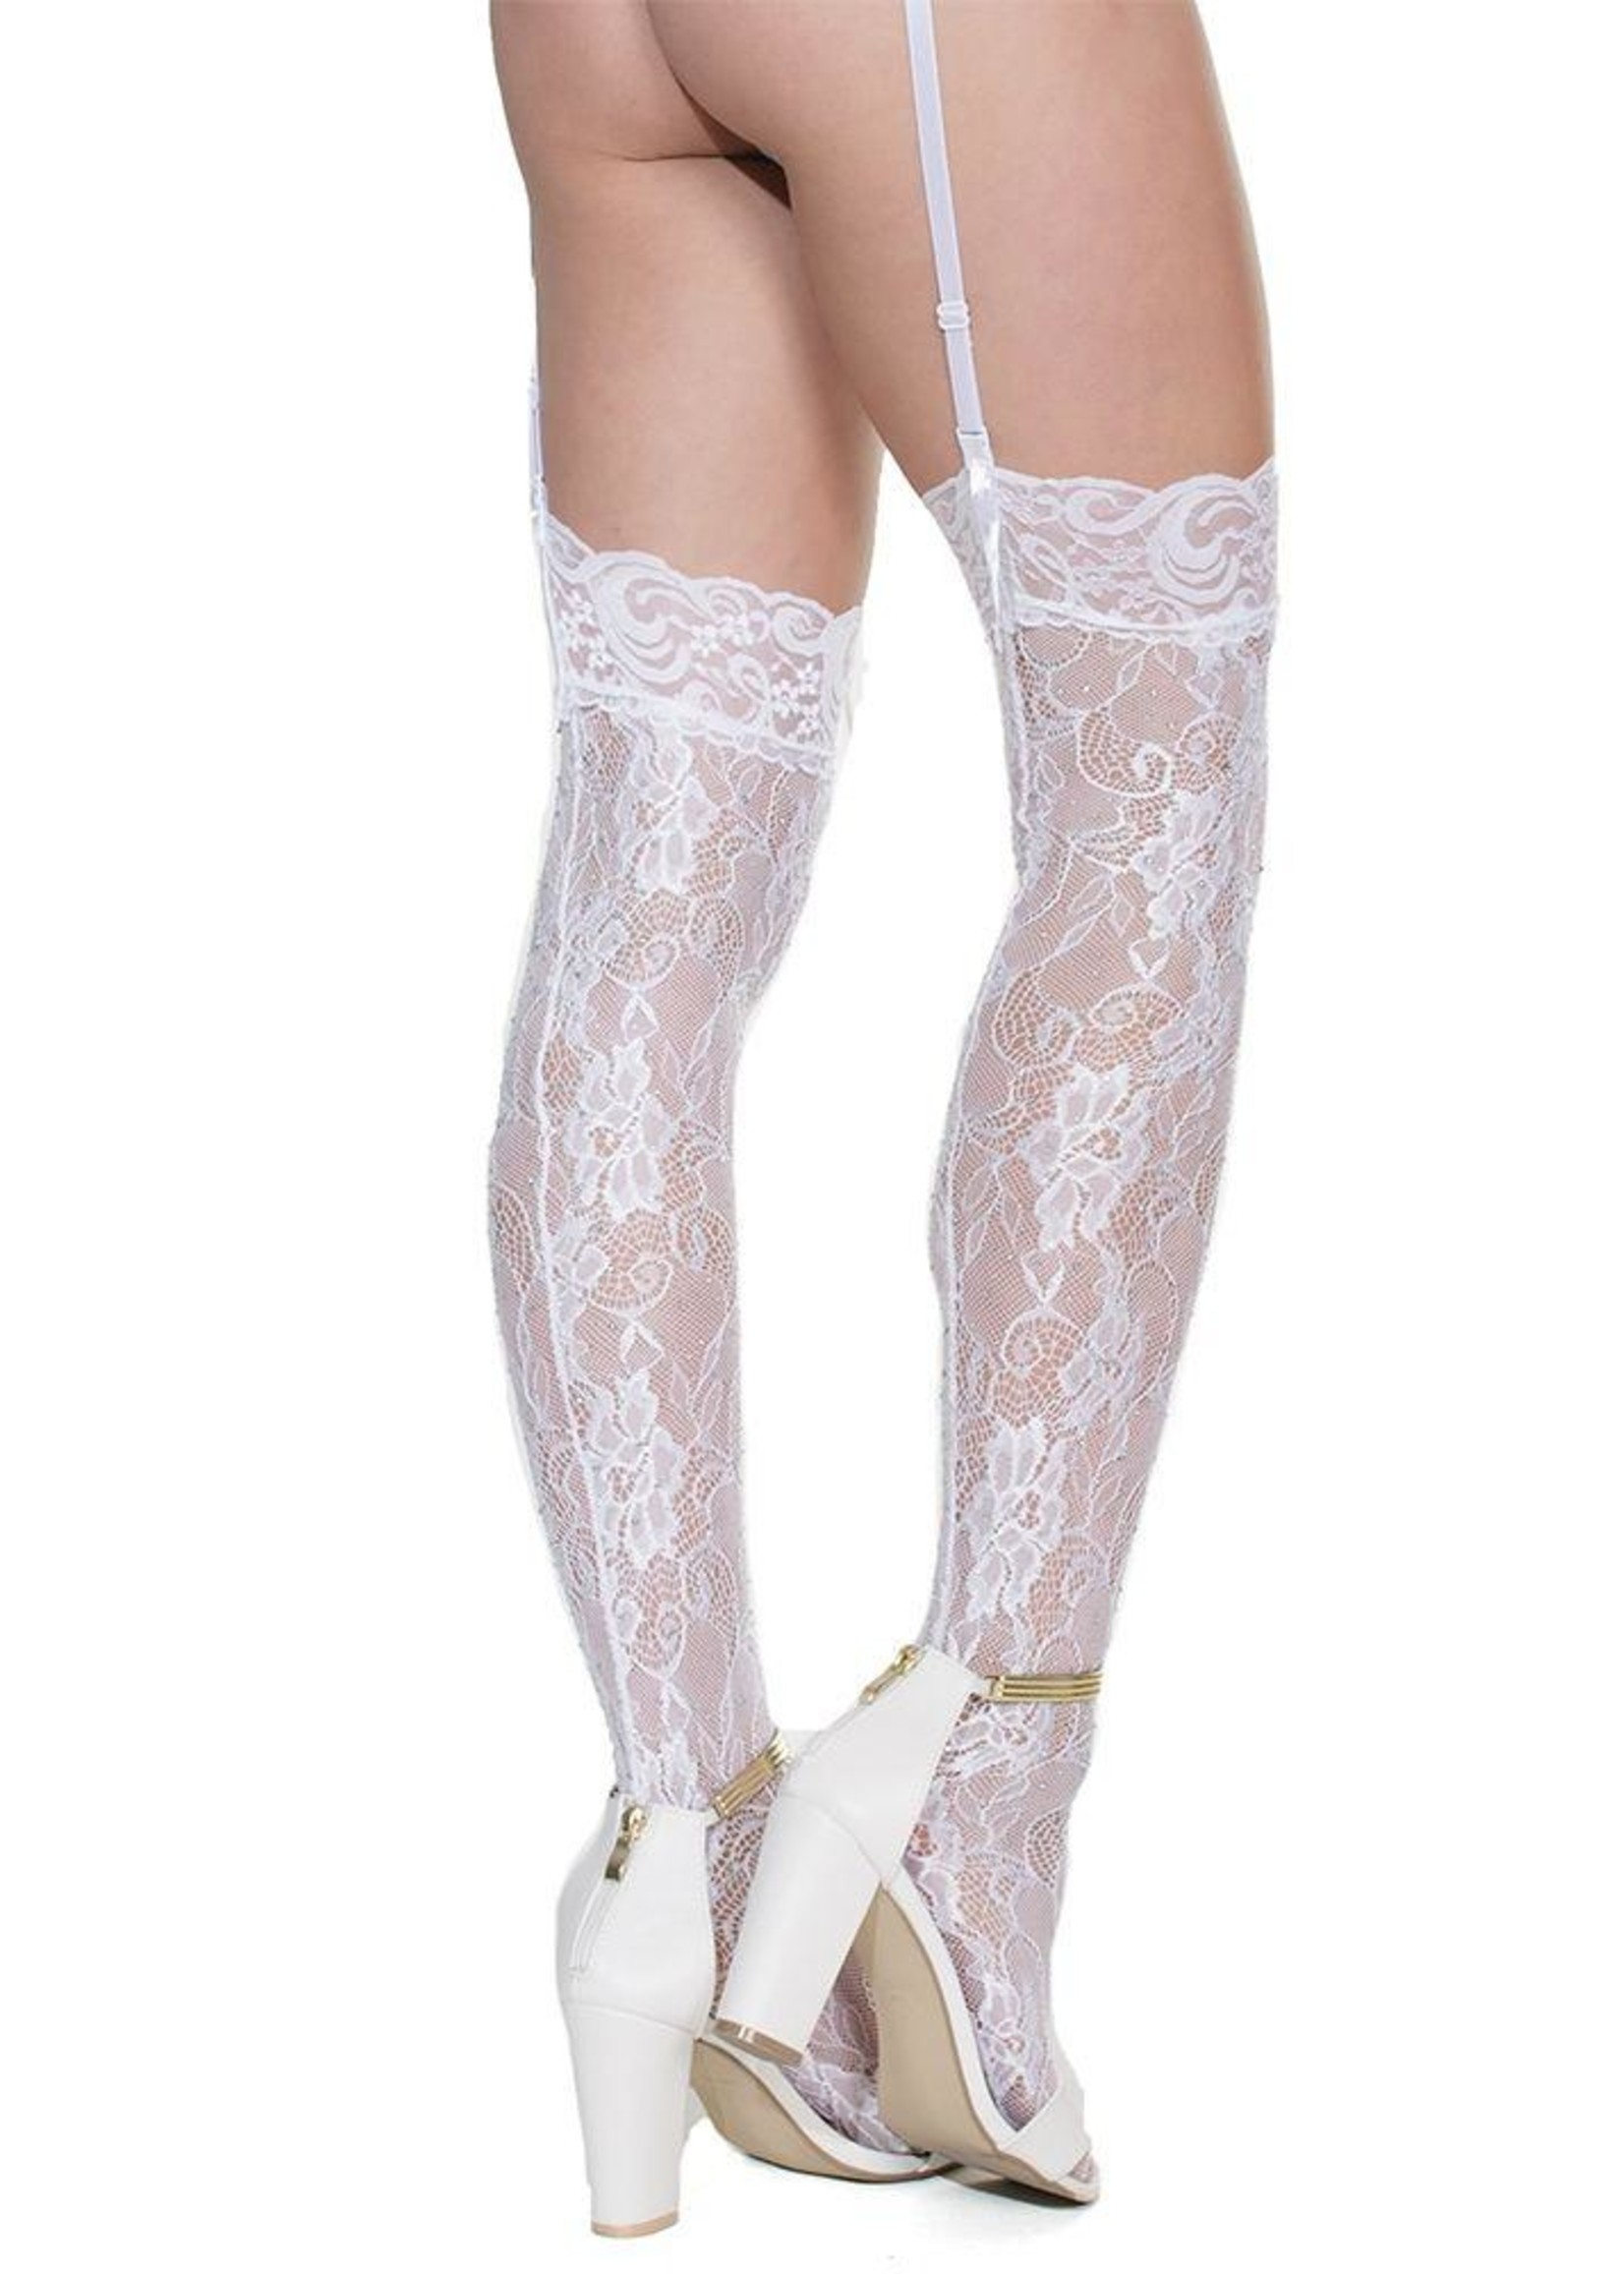 Rhinestone Thigh High White Lace Stockings